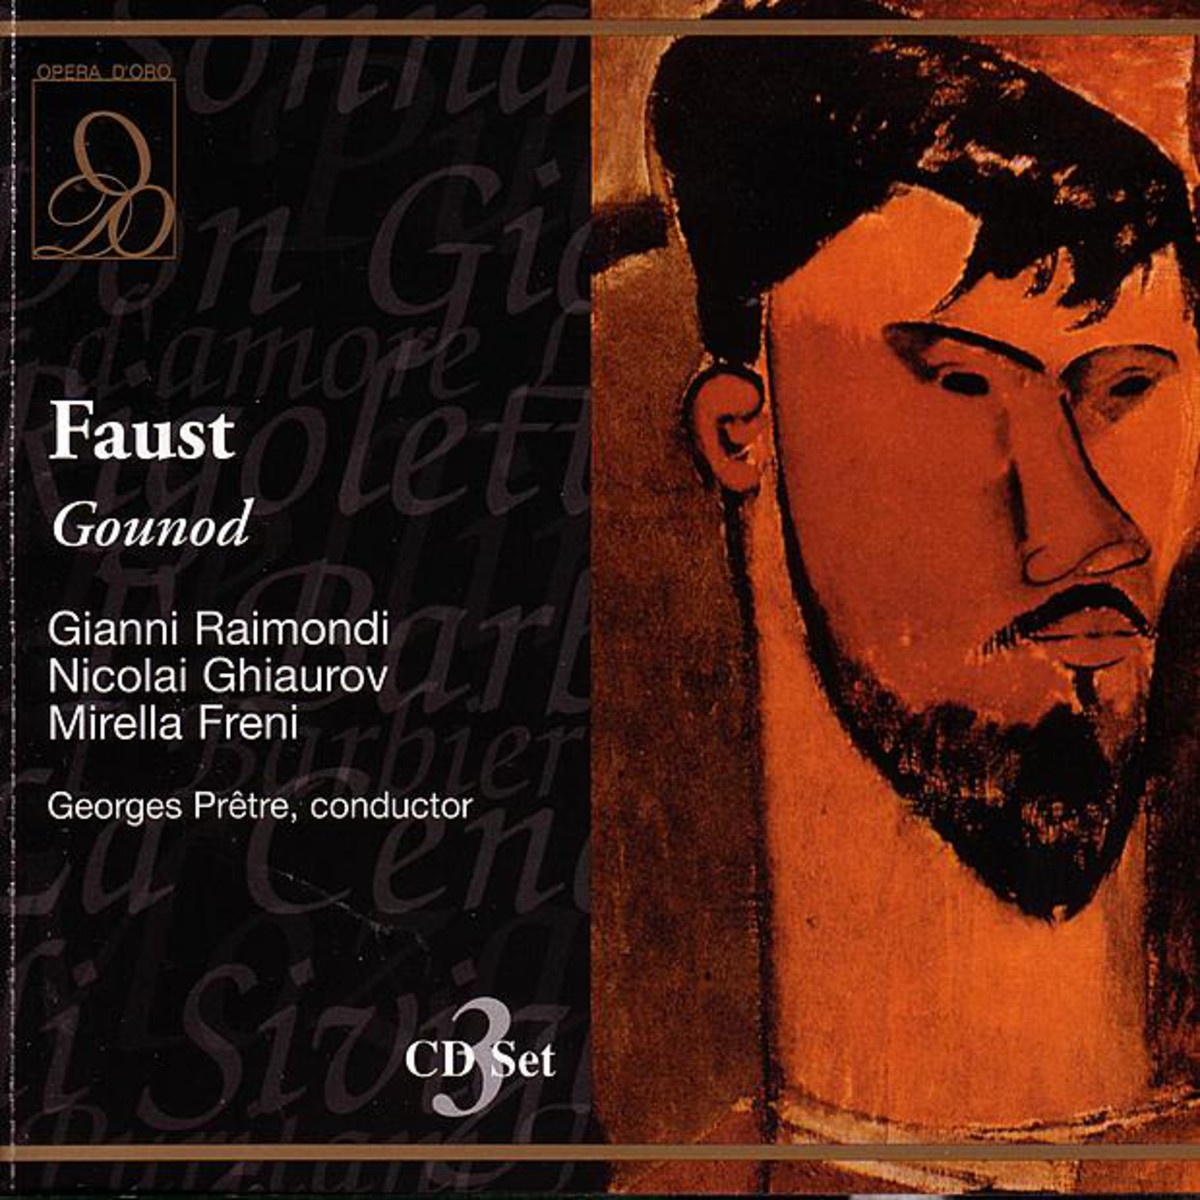 Faust 1986 Digital Remaster, Act I: A moi les plaisirs Faust Me phistophe le s